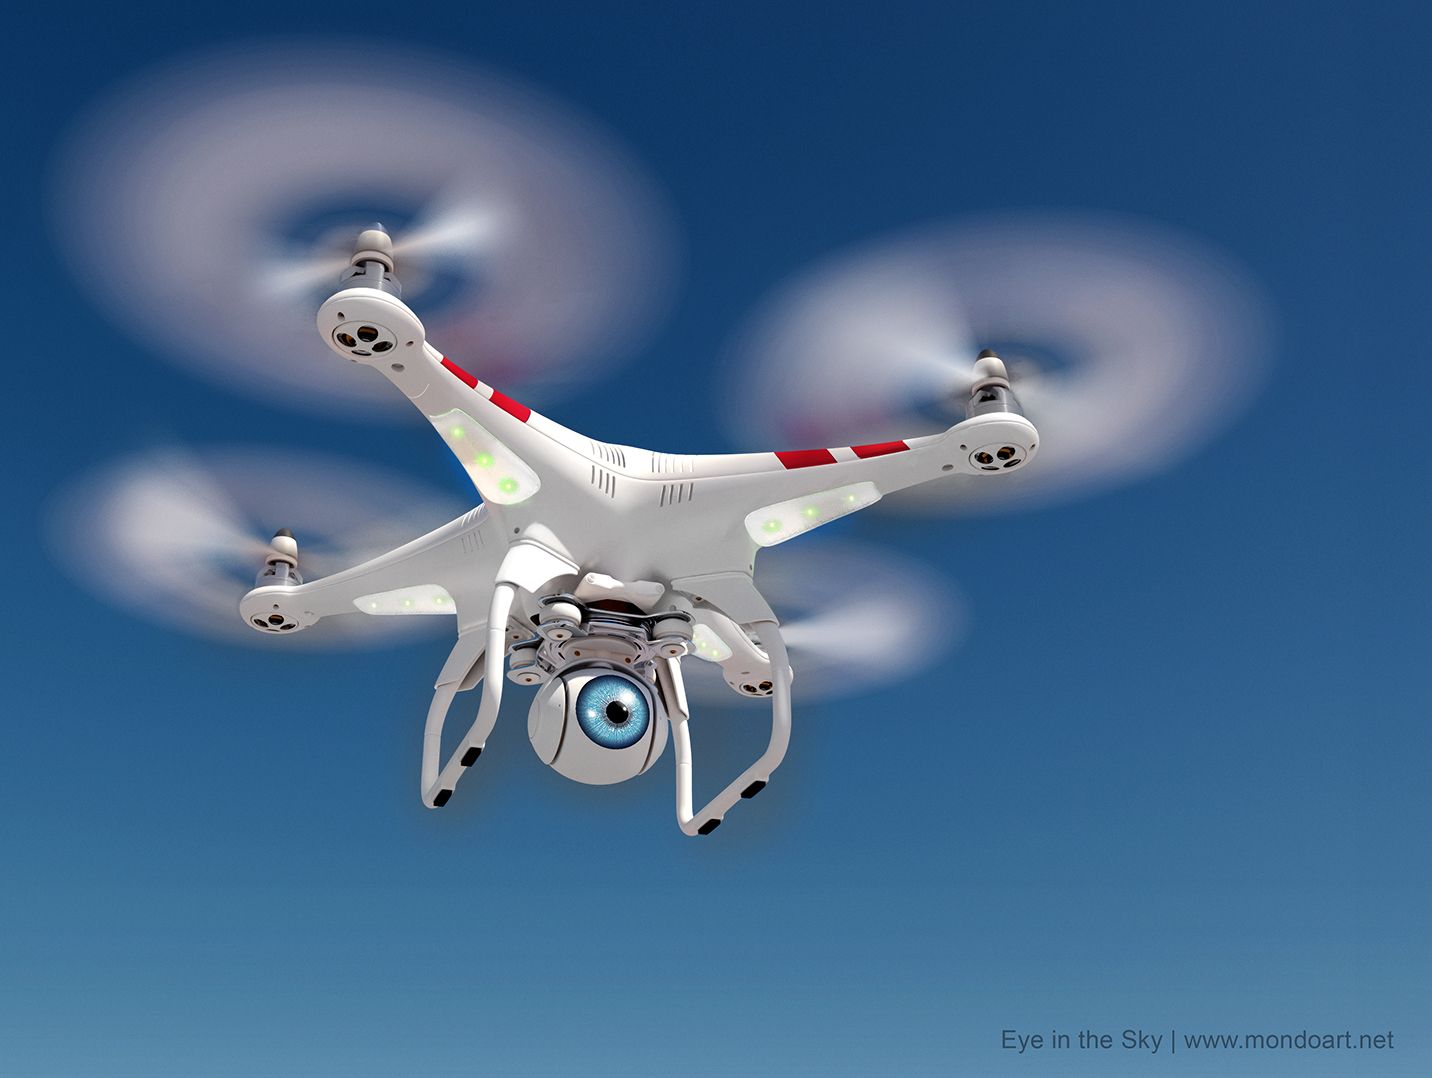 MondoWorks - Eye in the Sky Drone Phantom GoPro.jpg